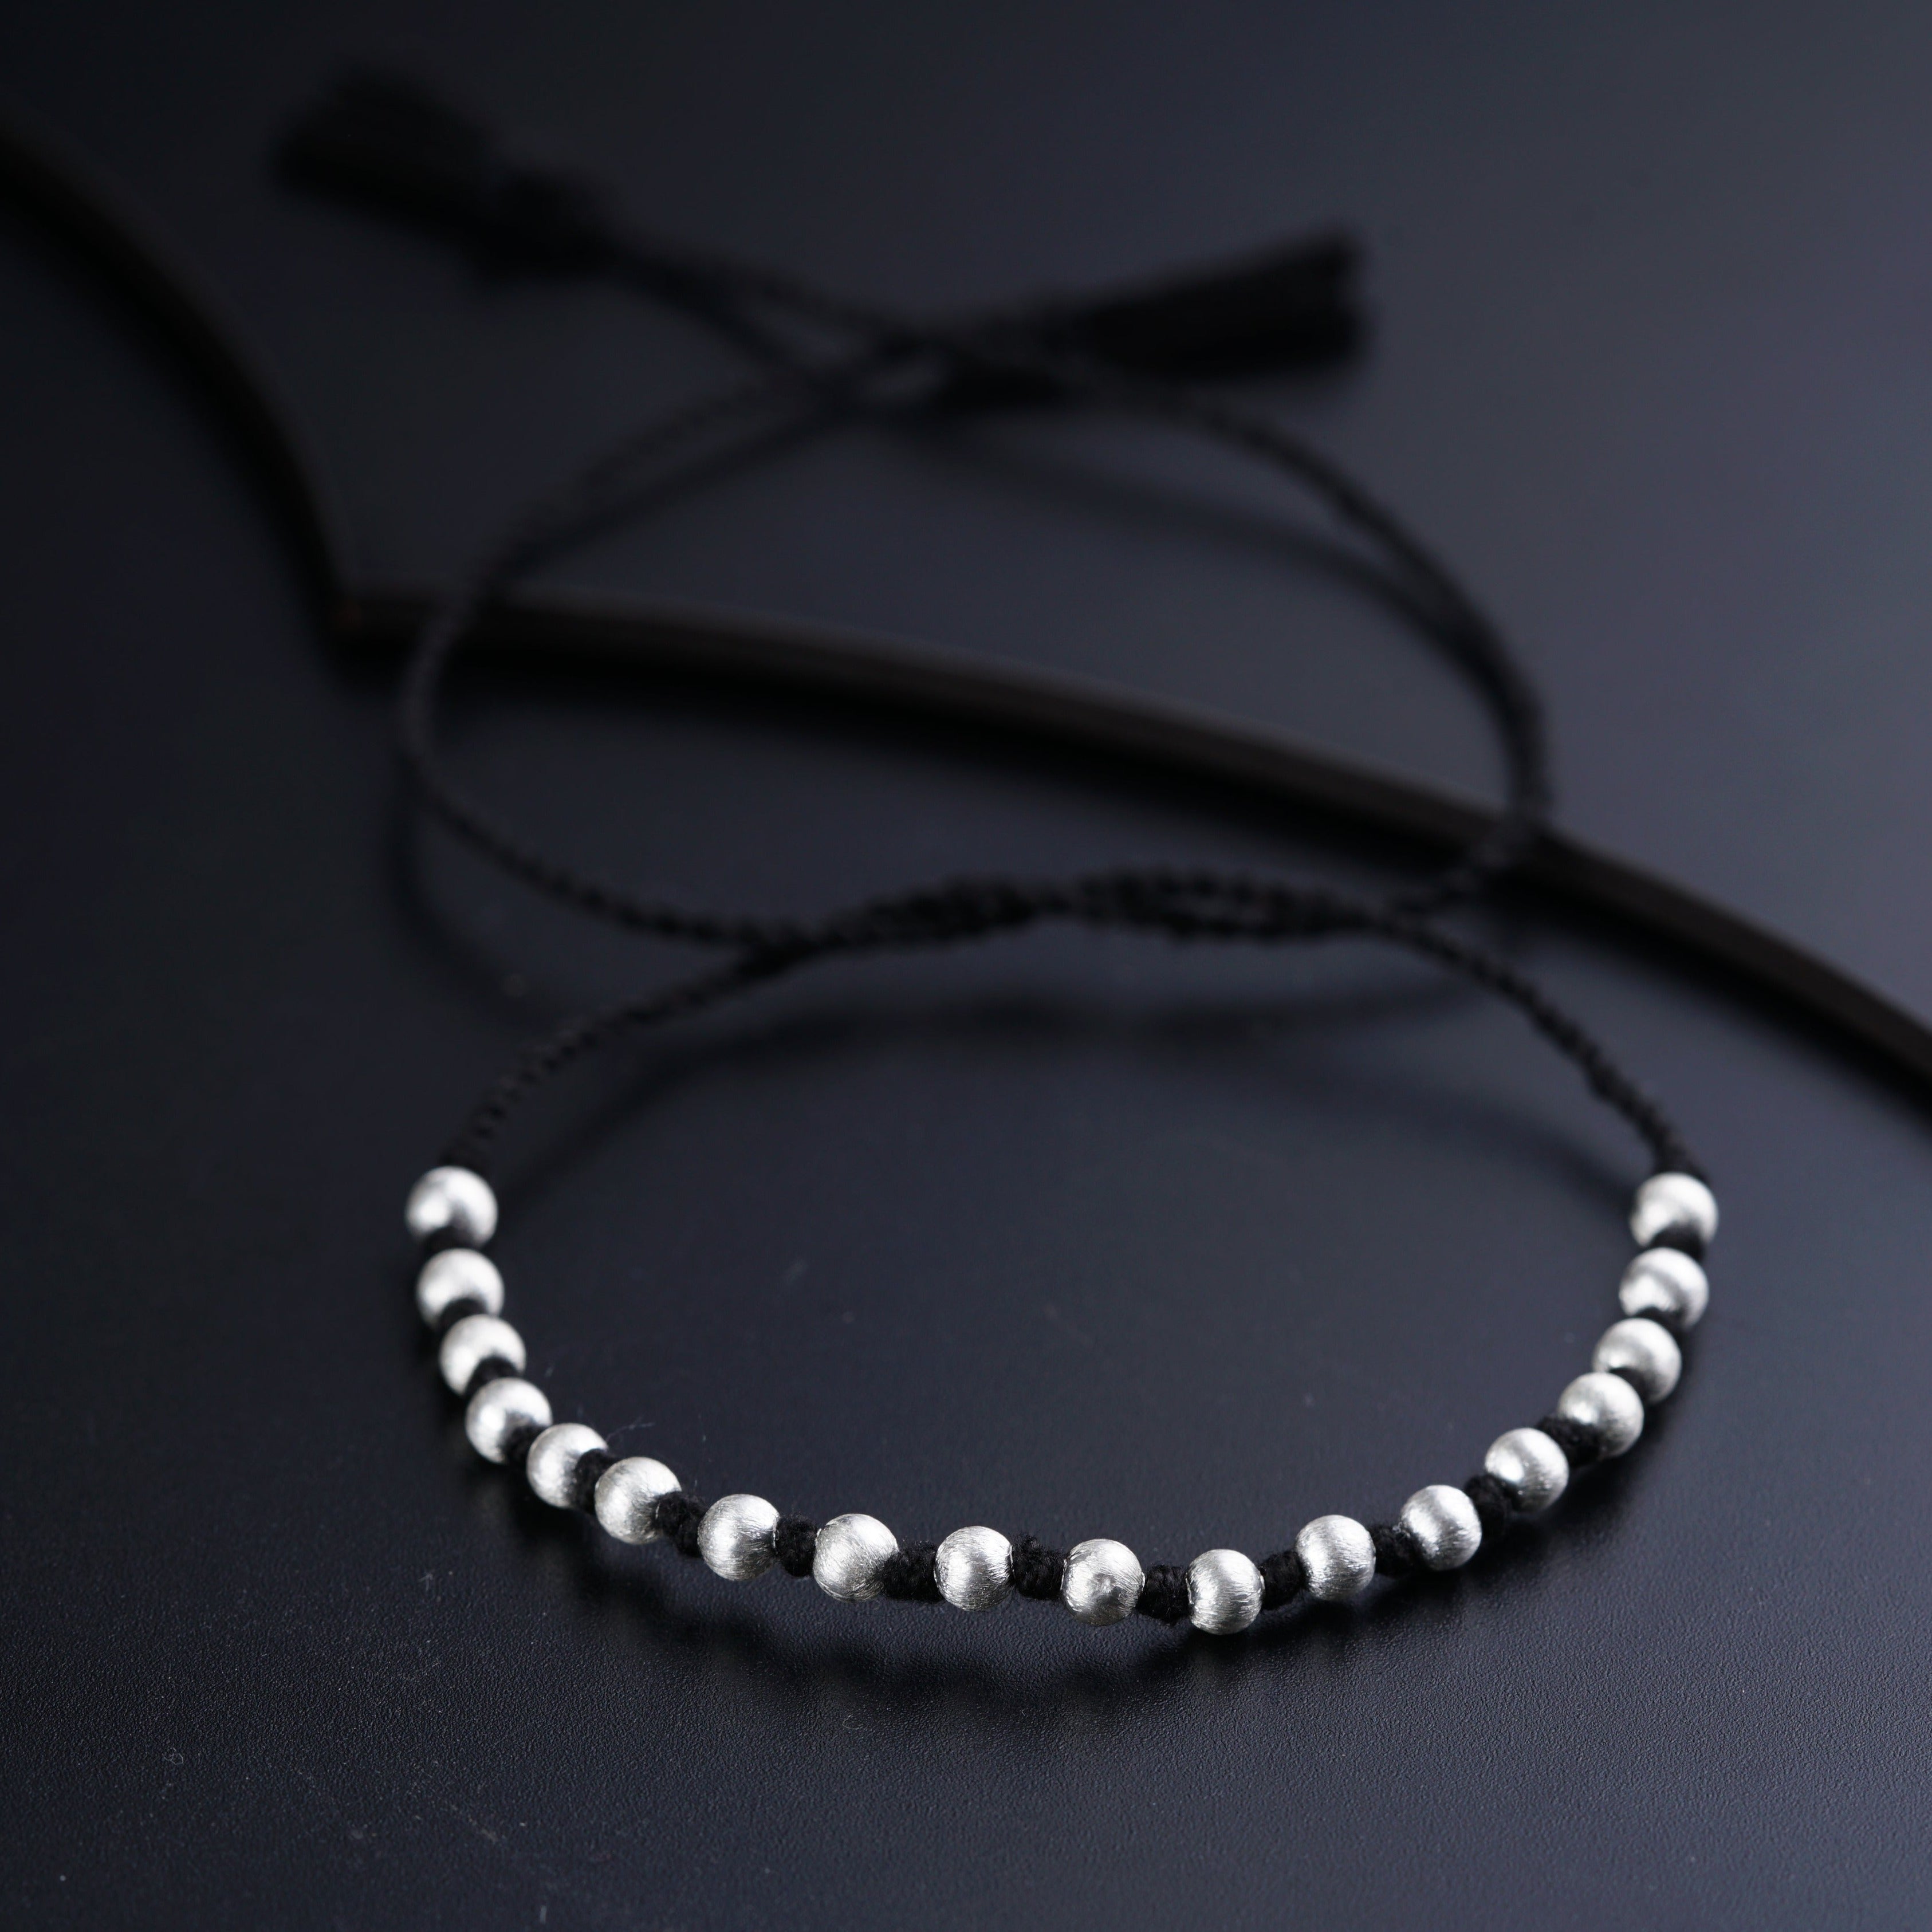 Tie & wear: Round Beads Anklet